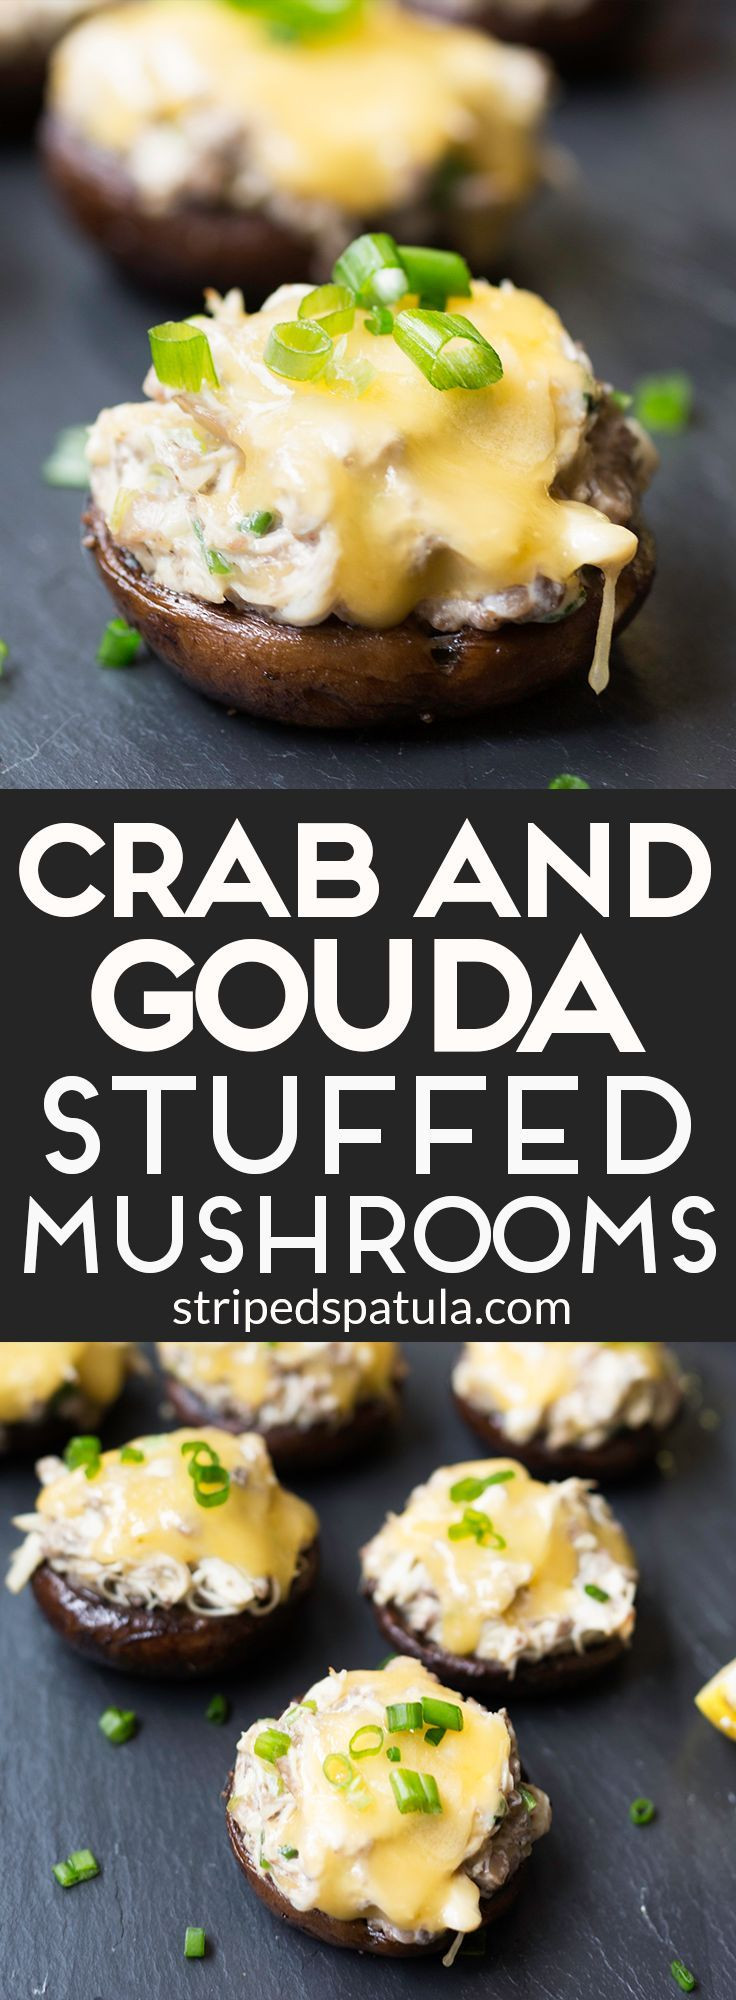 Mushrooms Appetizer Recipe
 Crab Stuffed Mushrooms with Gouda Recipe